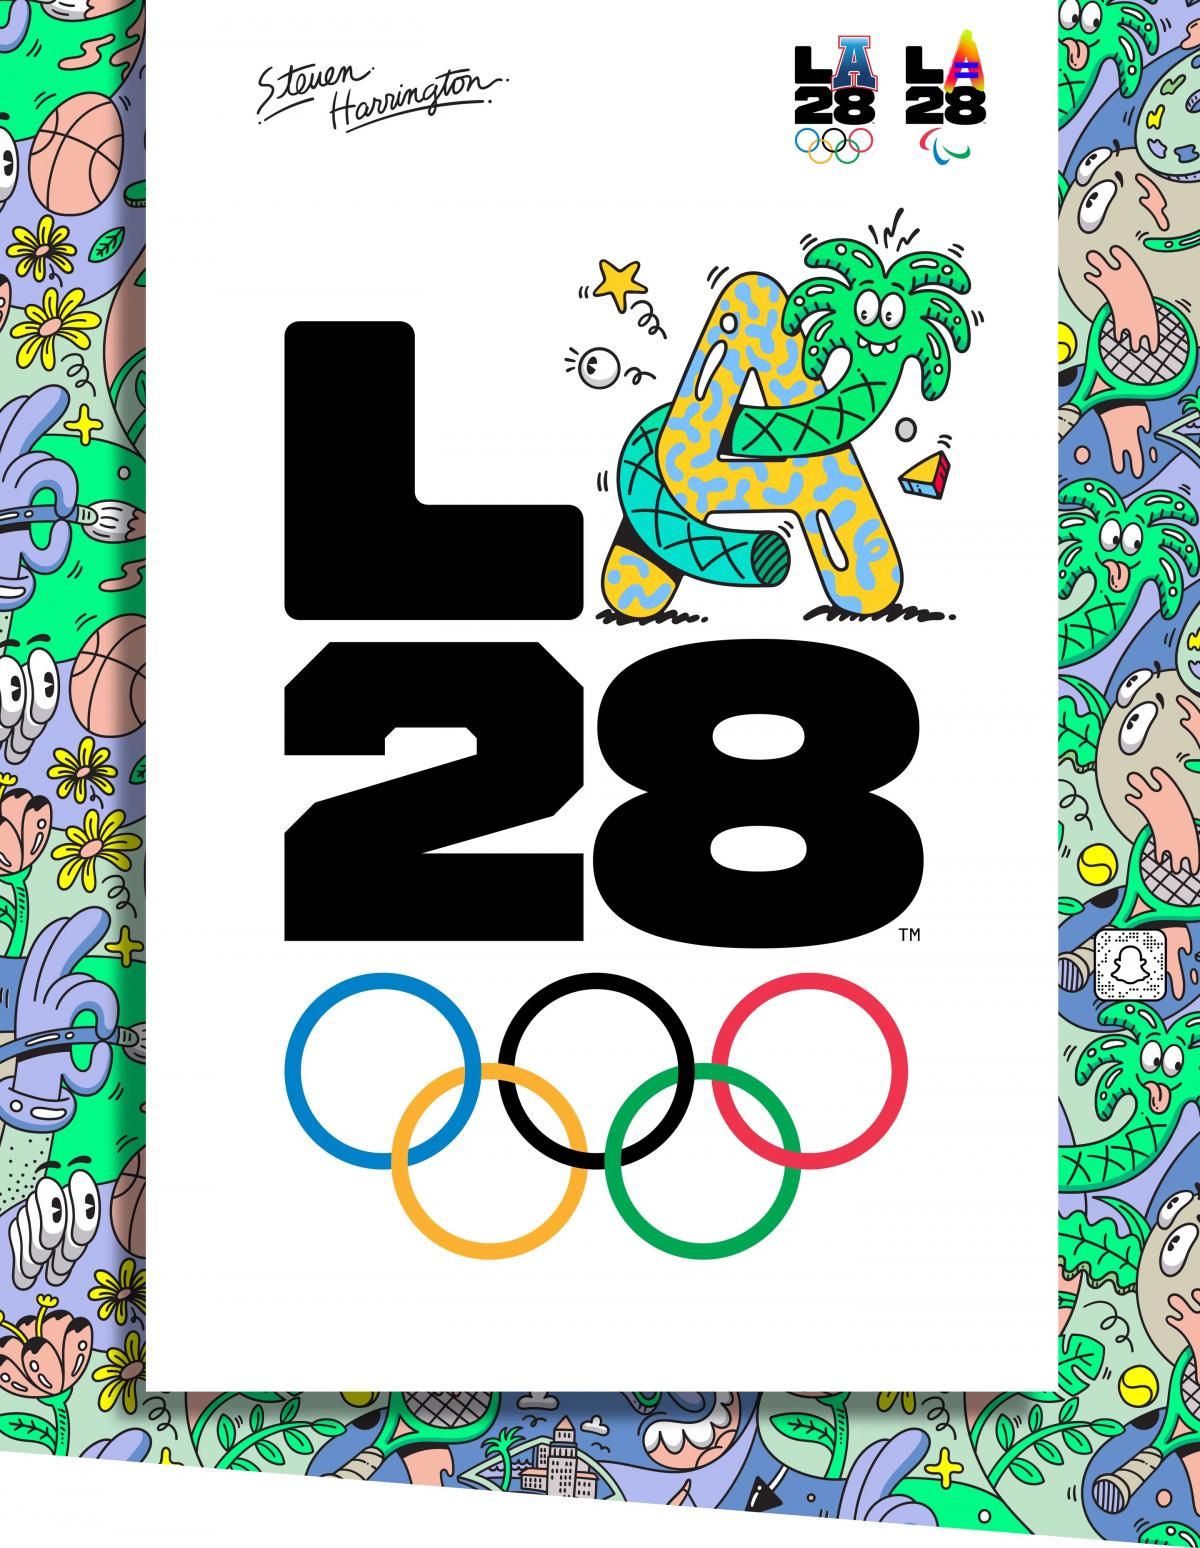 2028 Summer Olympics logo